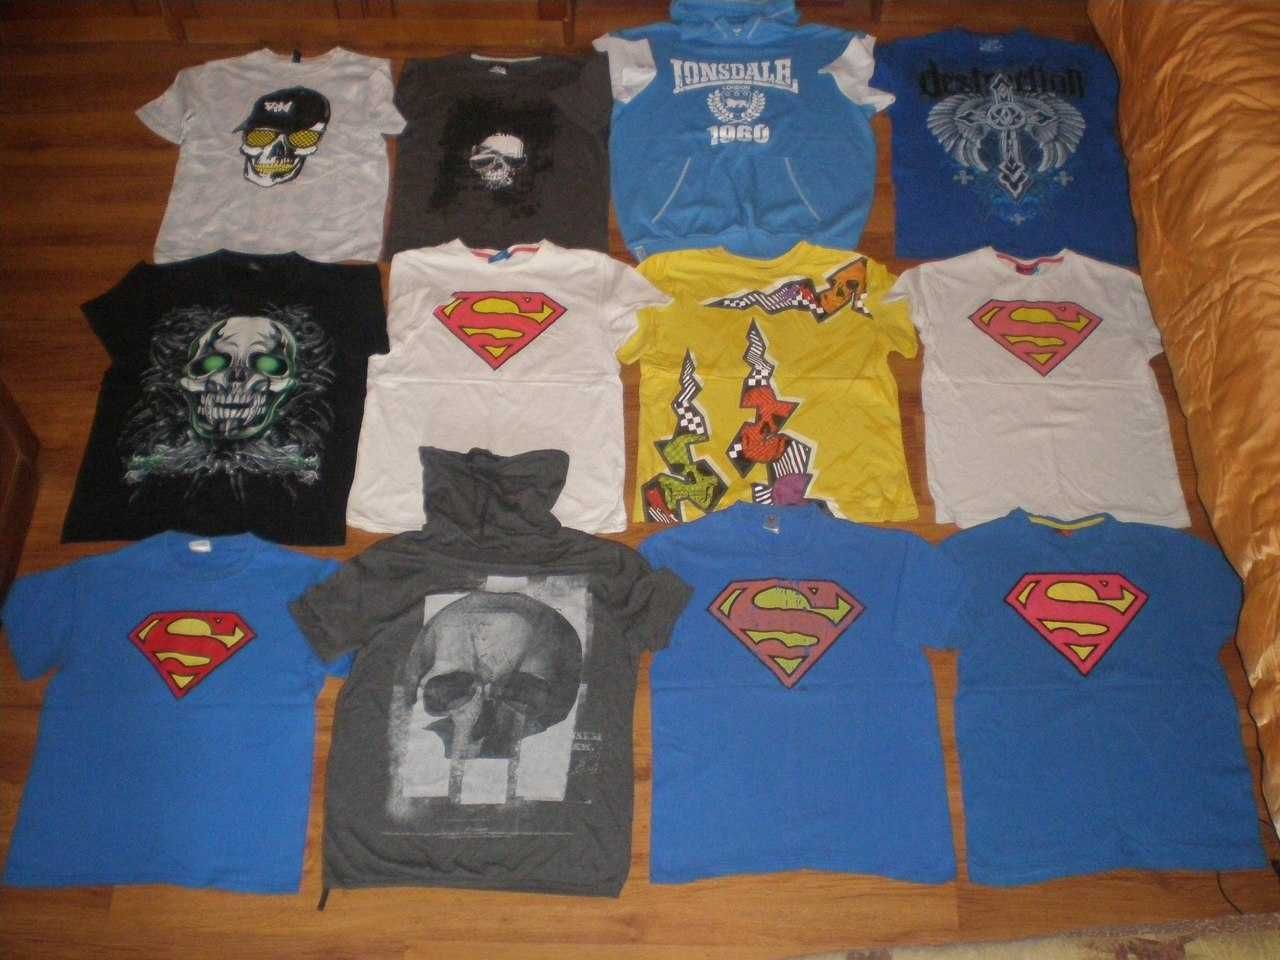 футболка Superman